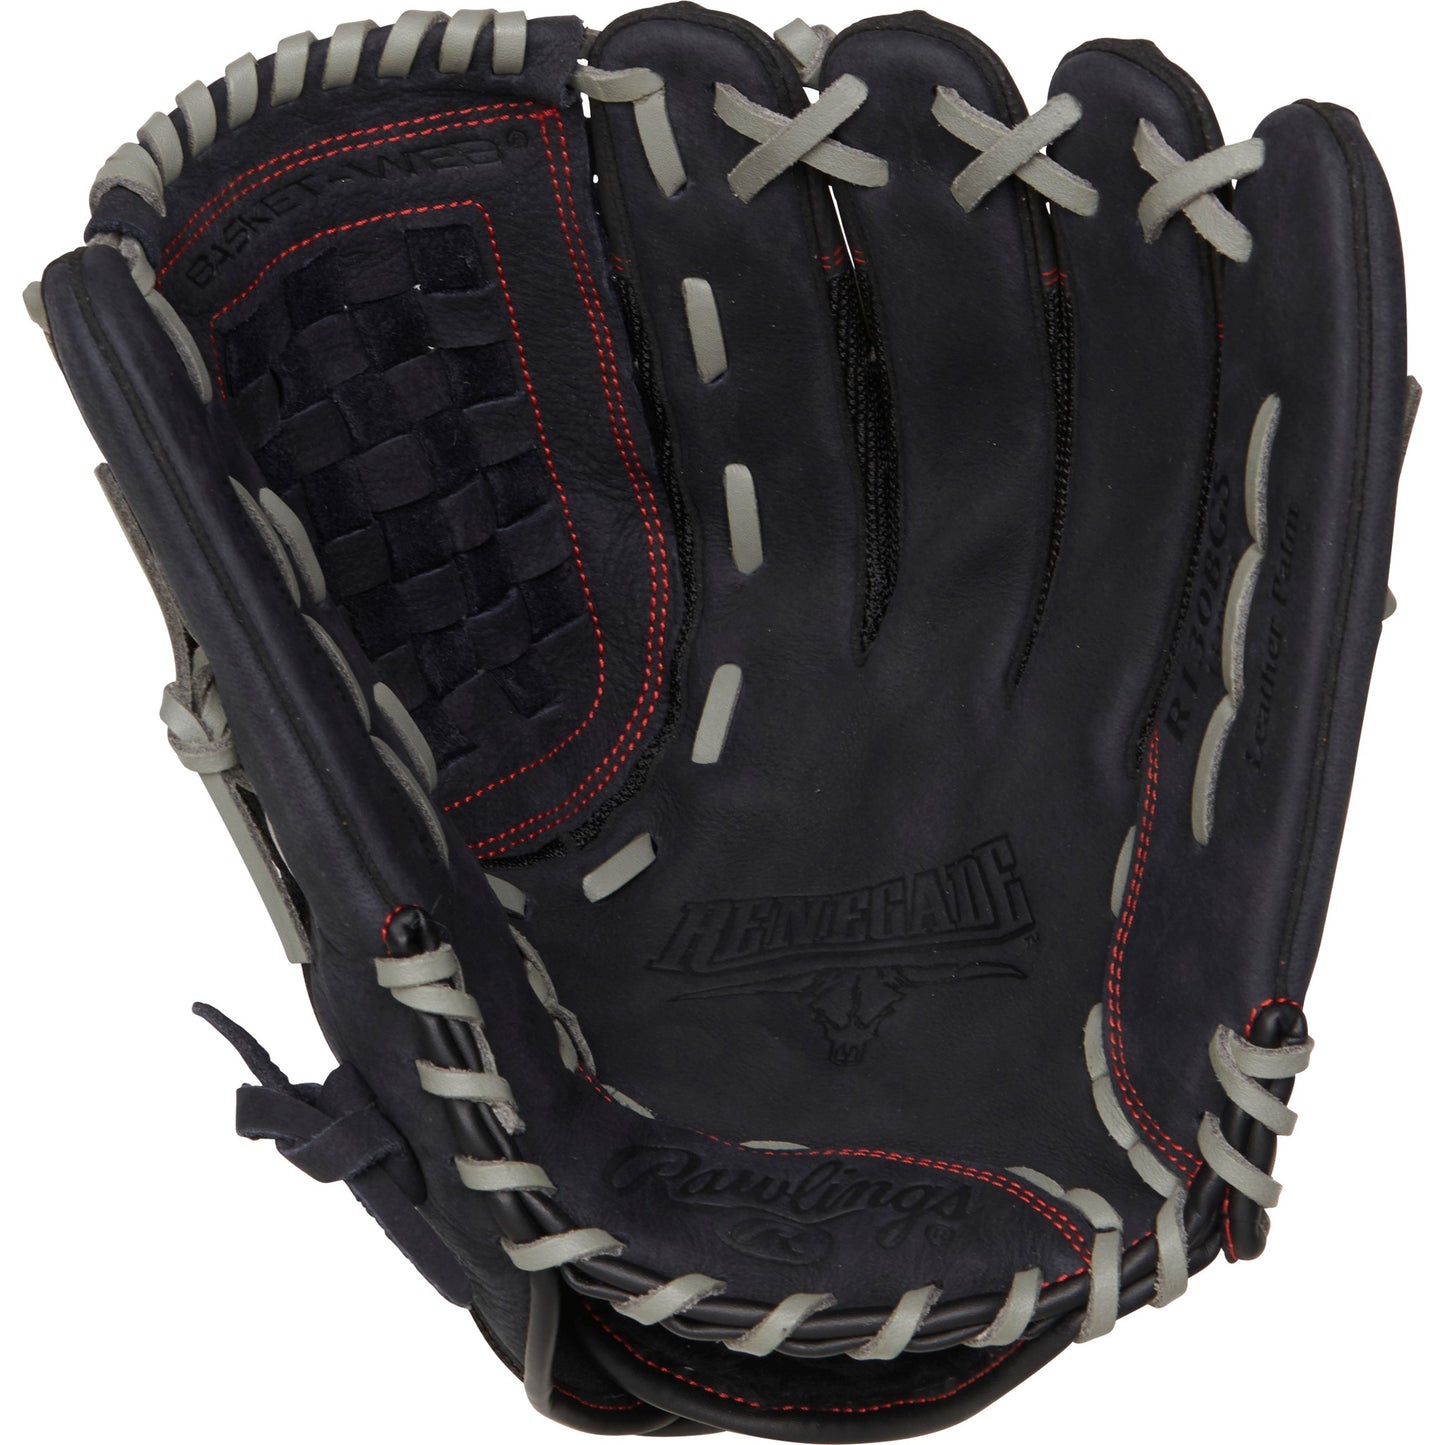 Rawlings (R130BGS) Renegade Series 13" Baseball/Softball Glove